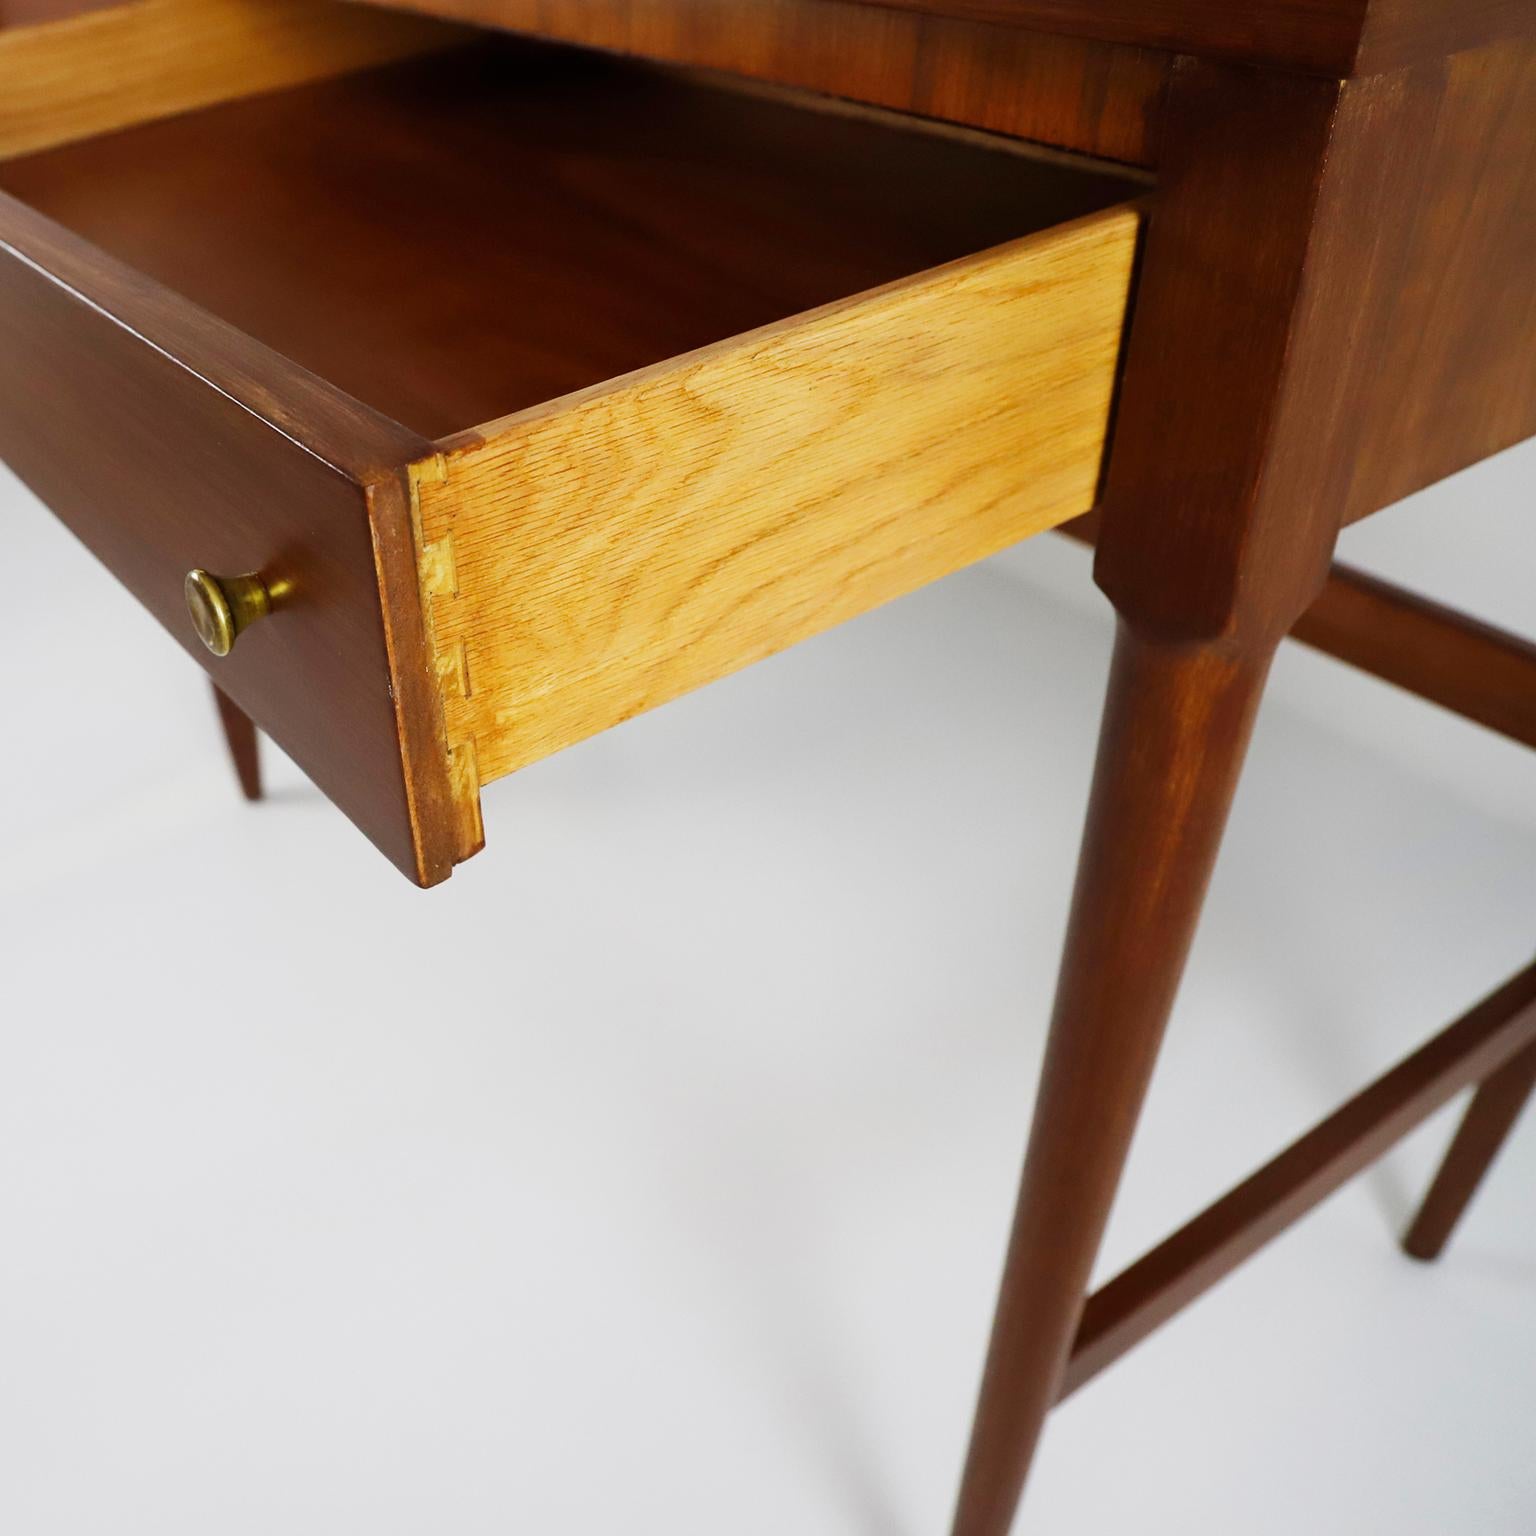 Mid-Century Modern Midcentury United Furniture Corporation Desk For Sale